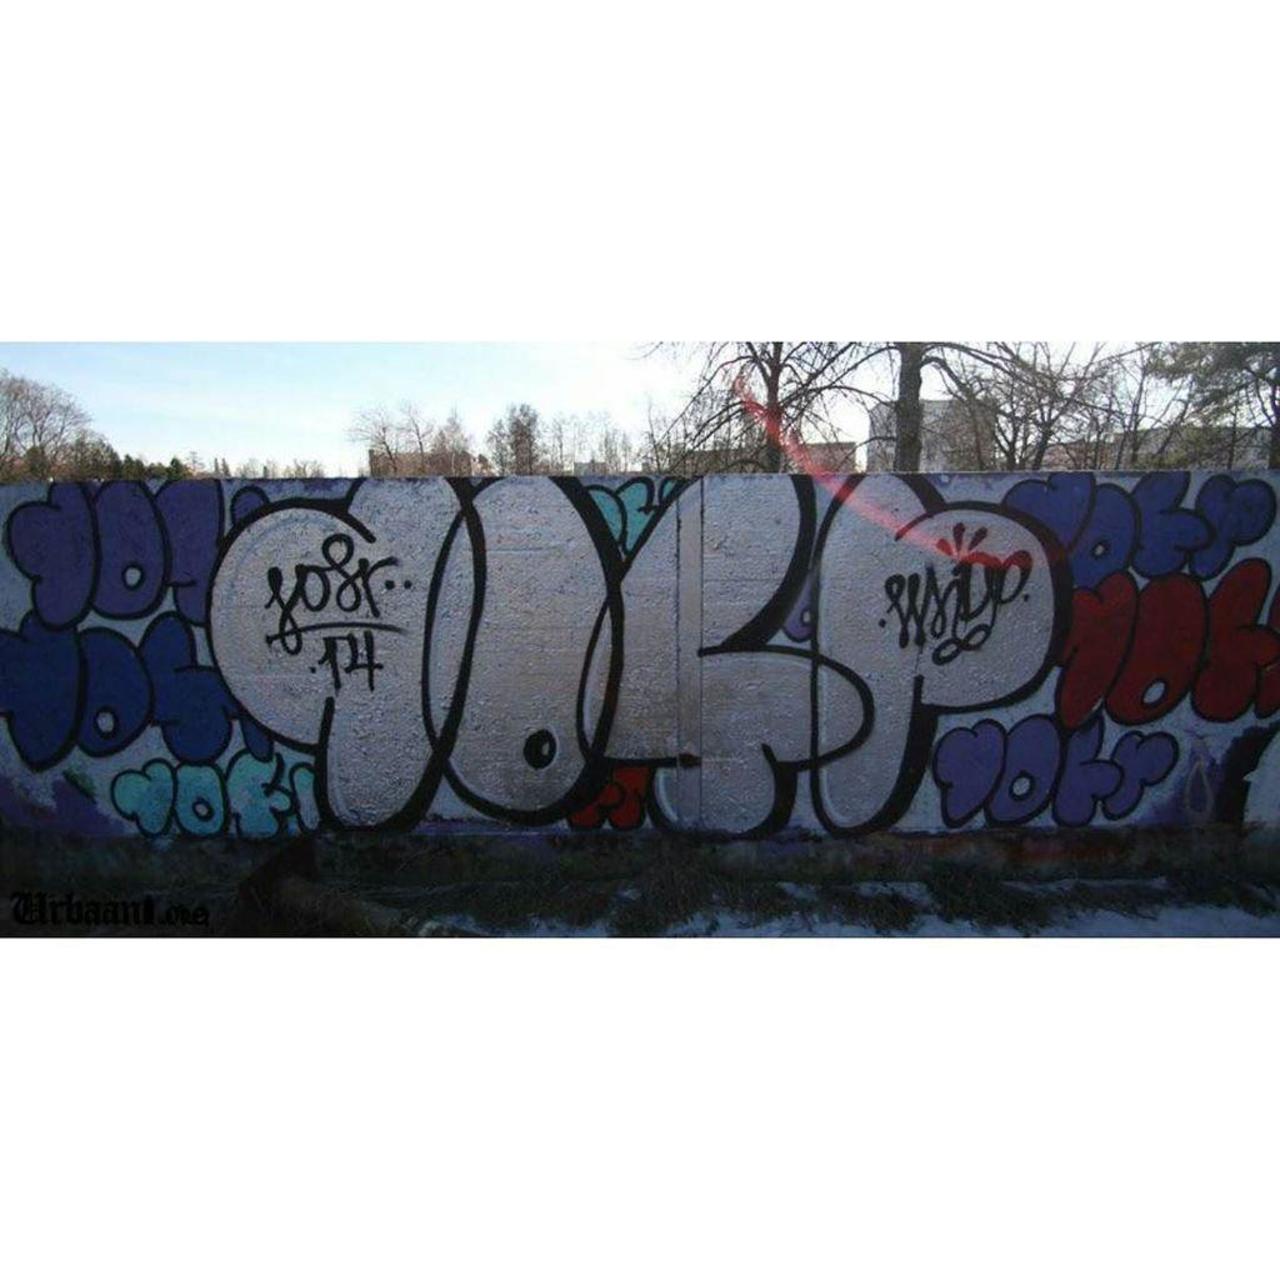 Yosr, 2014. @yosrwhdp

#graffiti #graff #graffporn #graffitiporn #streetart #streetartever… http://ift.tt/1hwAtLi http://t.co/T3zcfcmijg